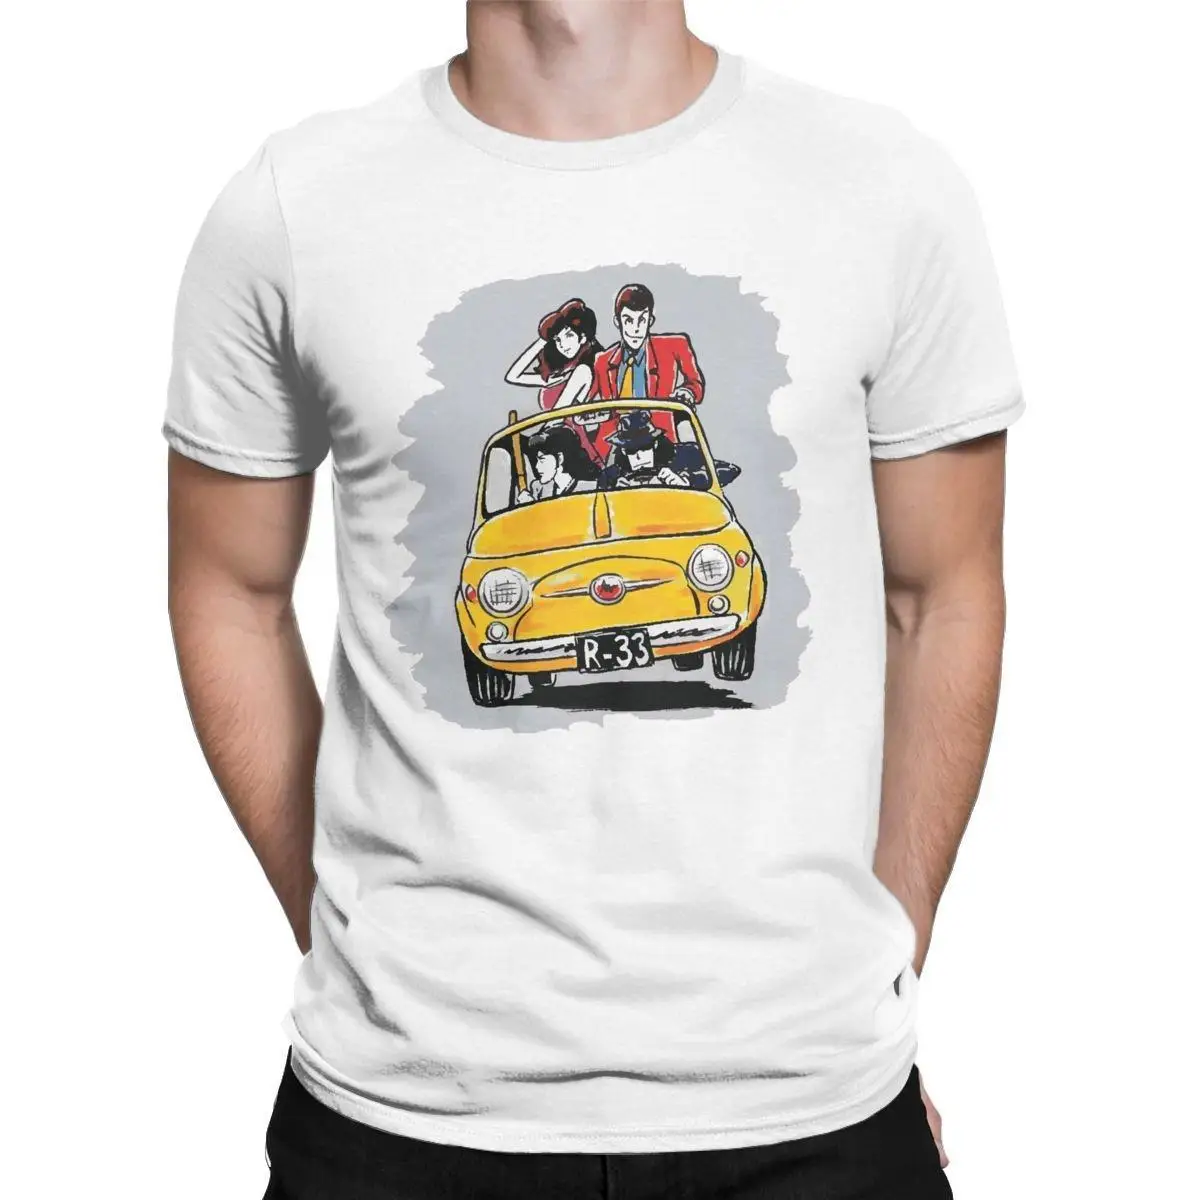 

Lupin III Family Monkey Punch T Shirts Men's 100% Cotton Fun T-Shirts Crew Neck Tee Shirt Short Sleeve Clothes 4XL 5XL 6XL